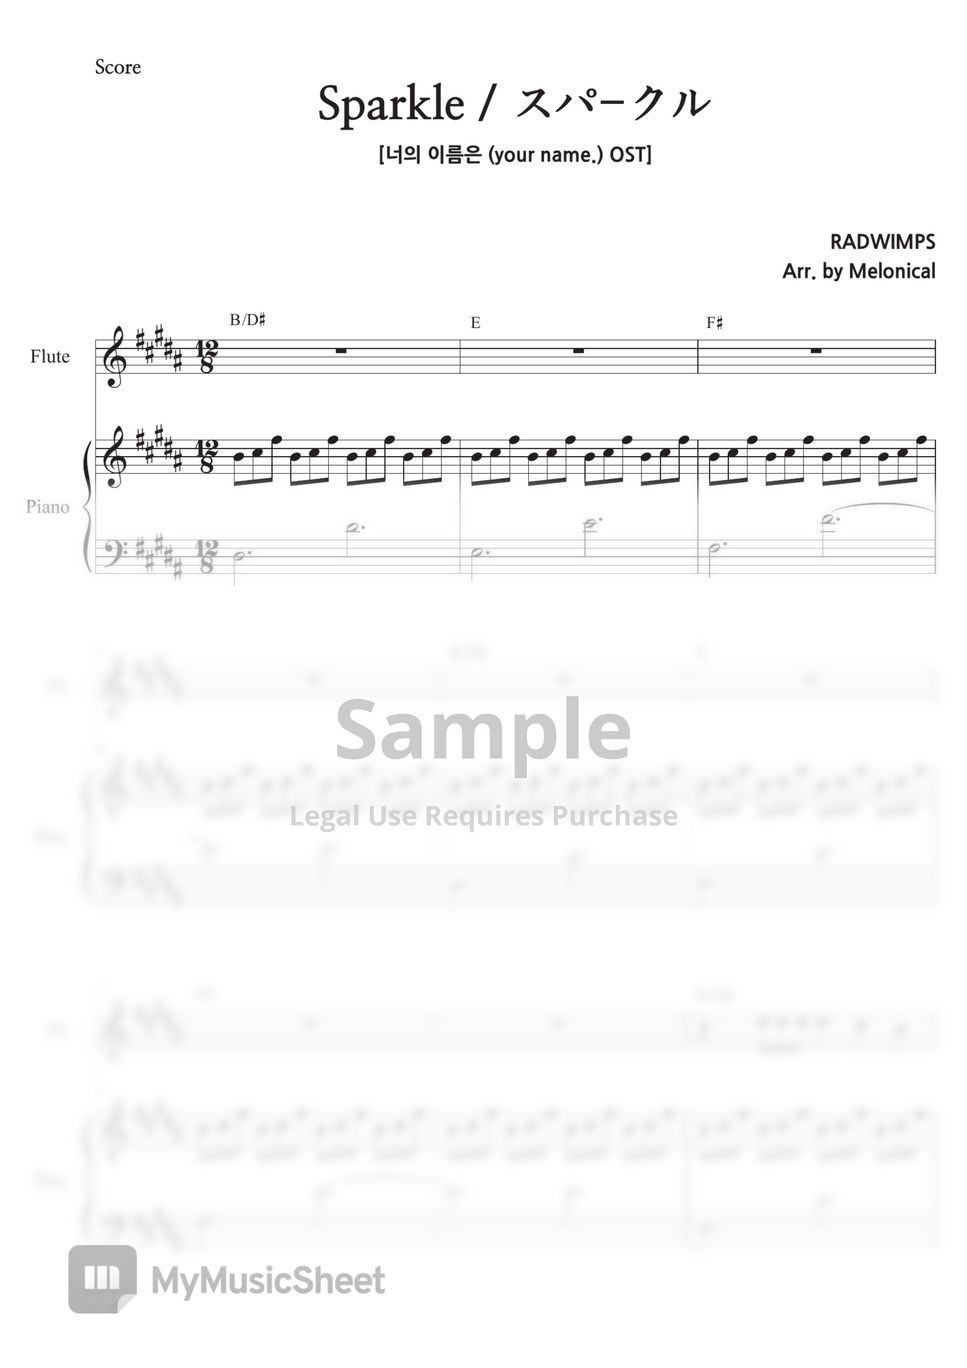 Radwimps - Sparkle (Ensemble) by Melonical